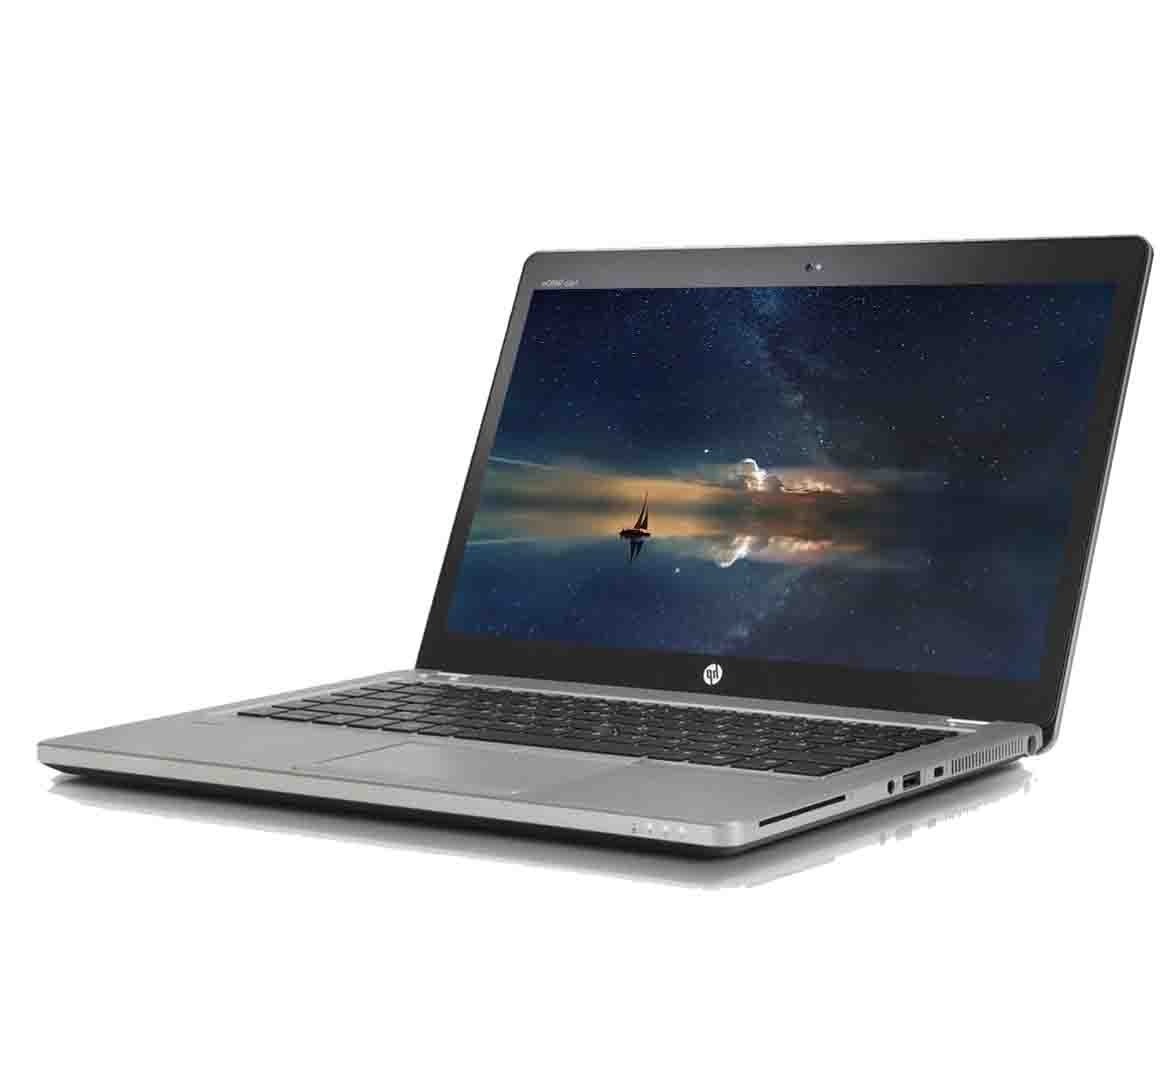 HP Elitebook Folio 9480M Business Laptop, Intel Core i7-4th Gen. CPU, 16GB RAM, 500GB HDD, 14 inch Display, Windows 10, Refurbished Laptop